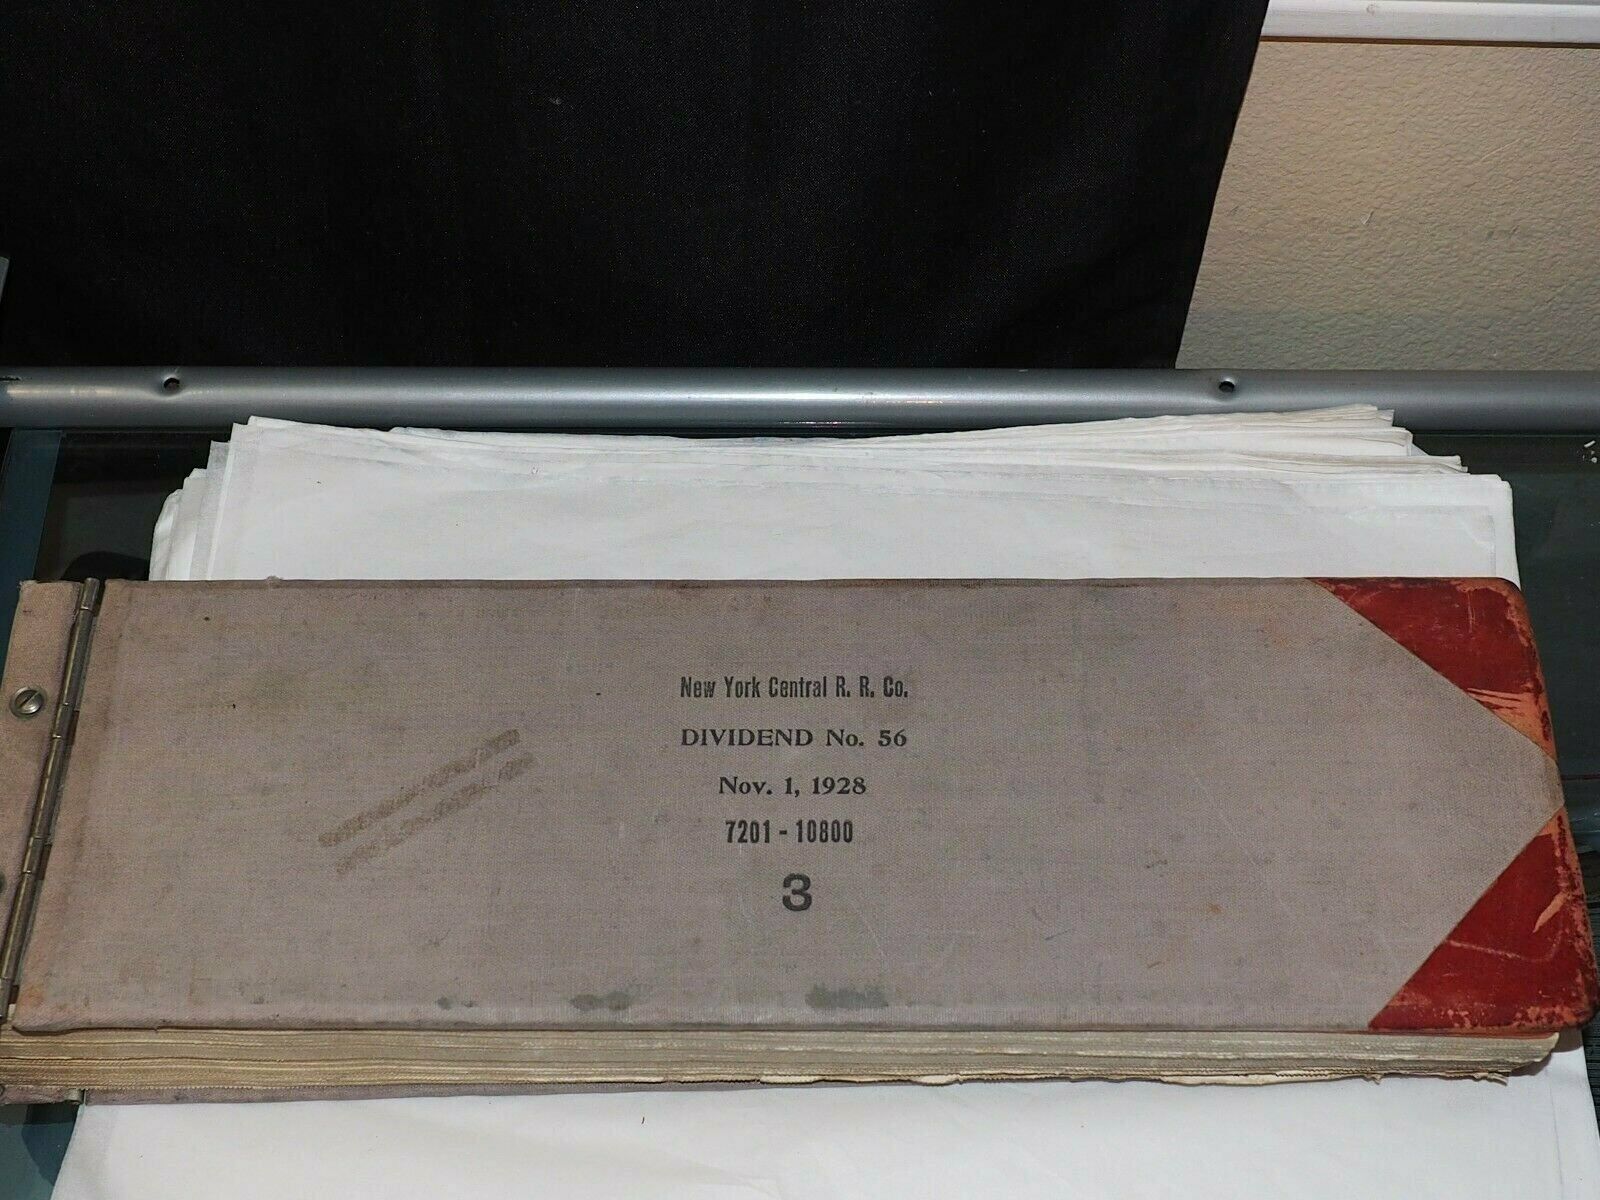 Scarce Original New York Central R.R. DIVIDEND 56 Ledger 1928 Has 3599 receipts